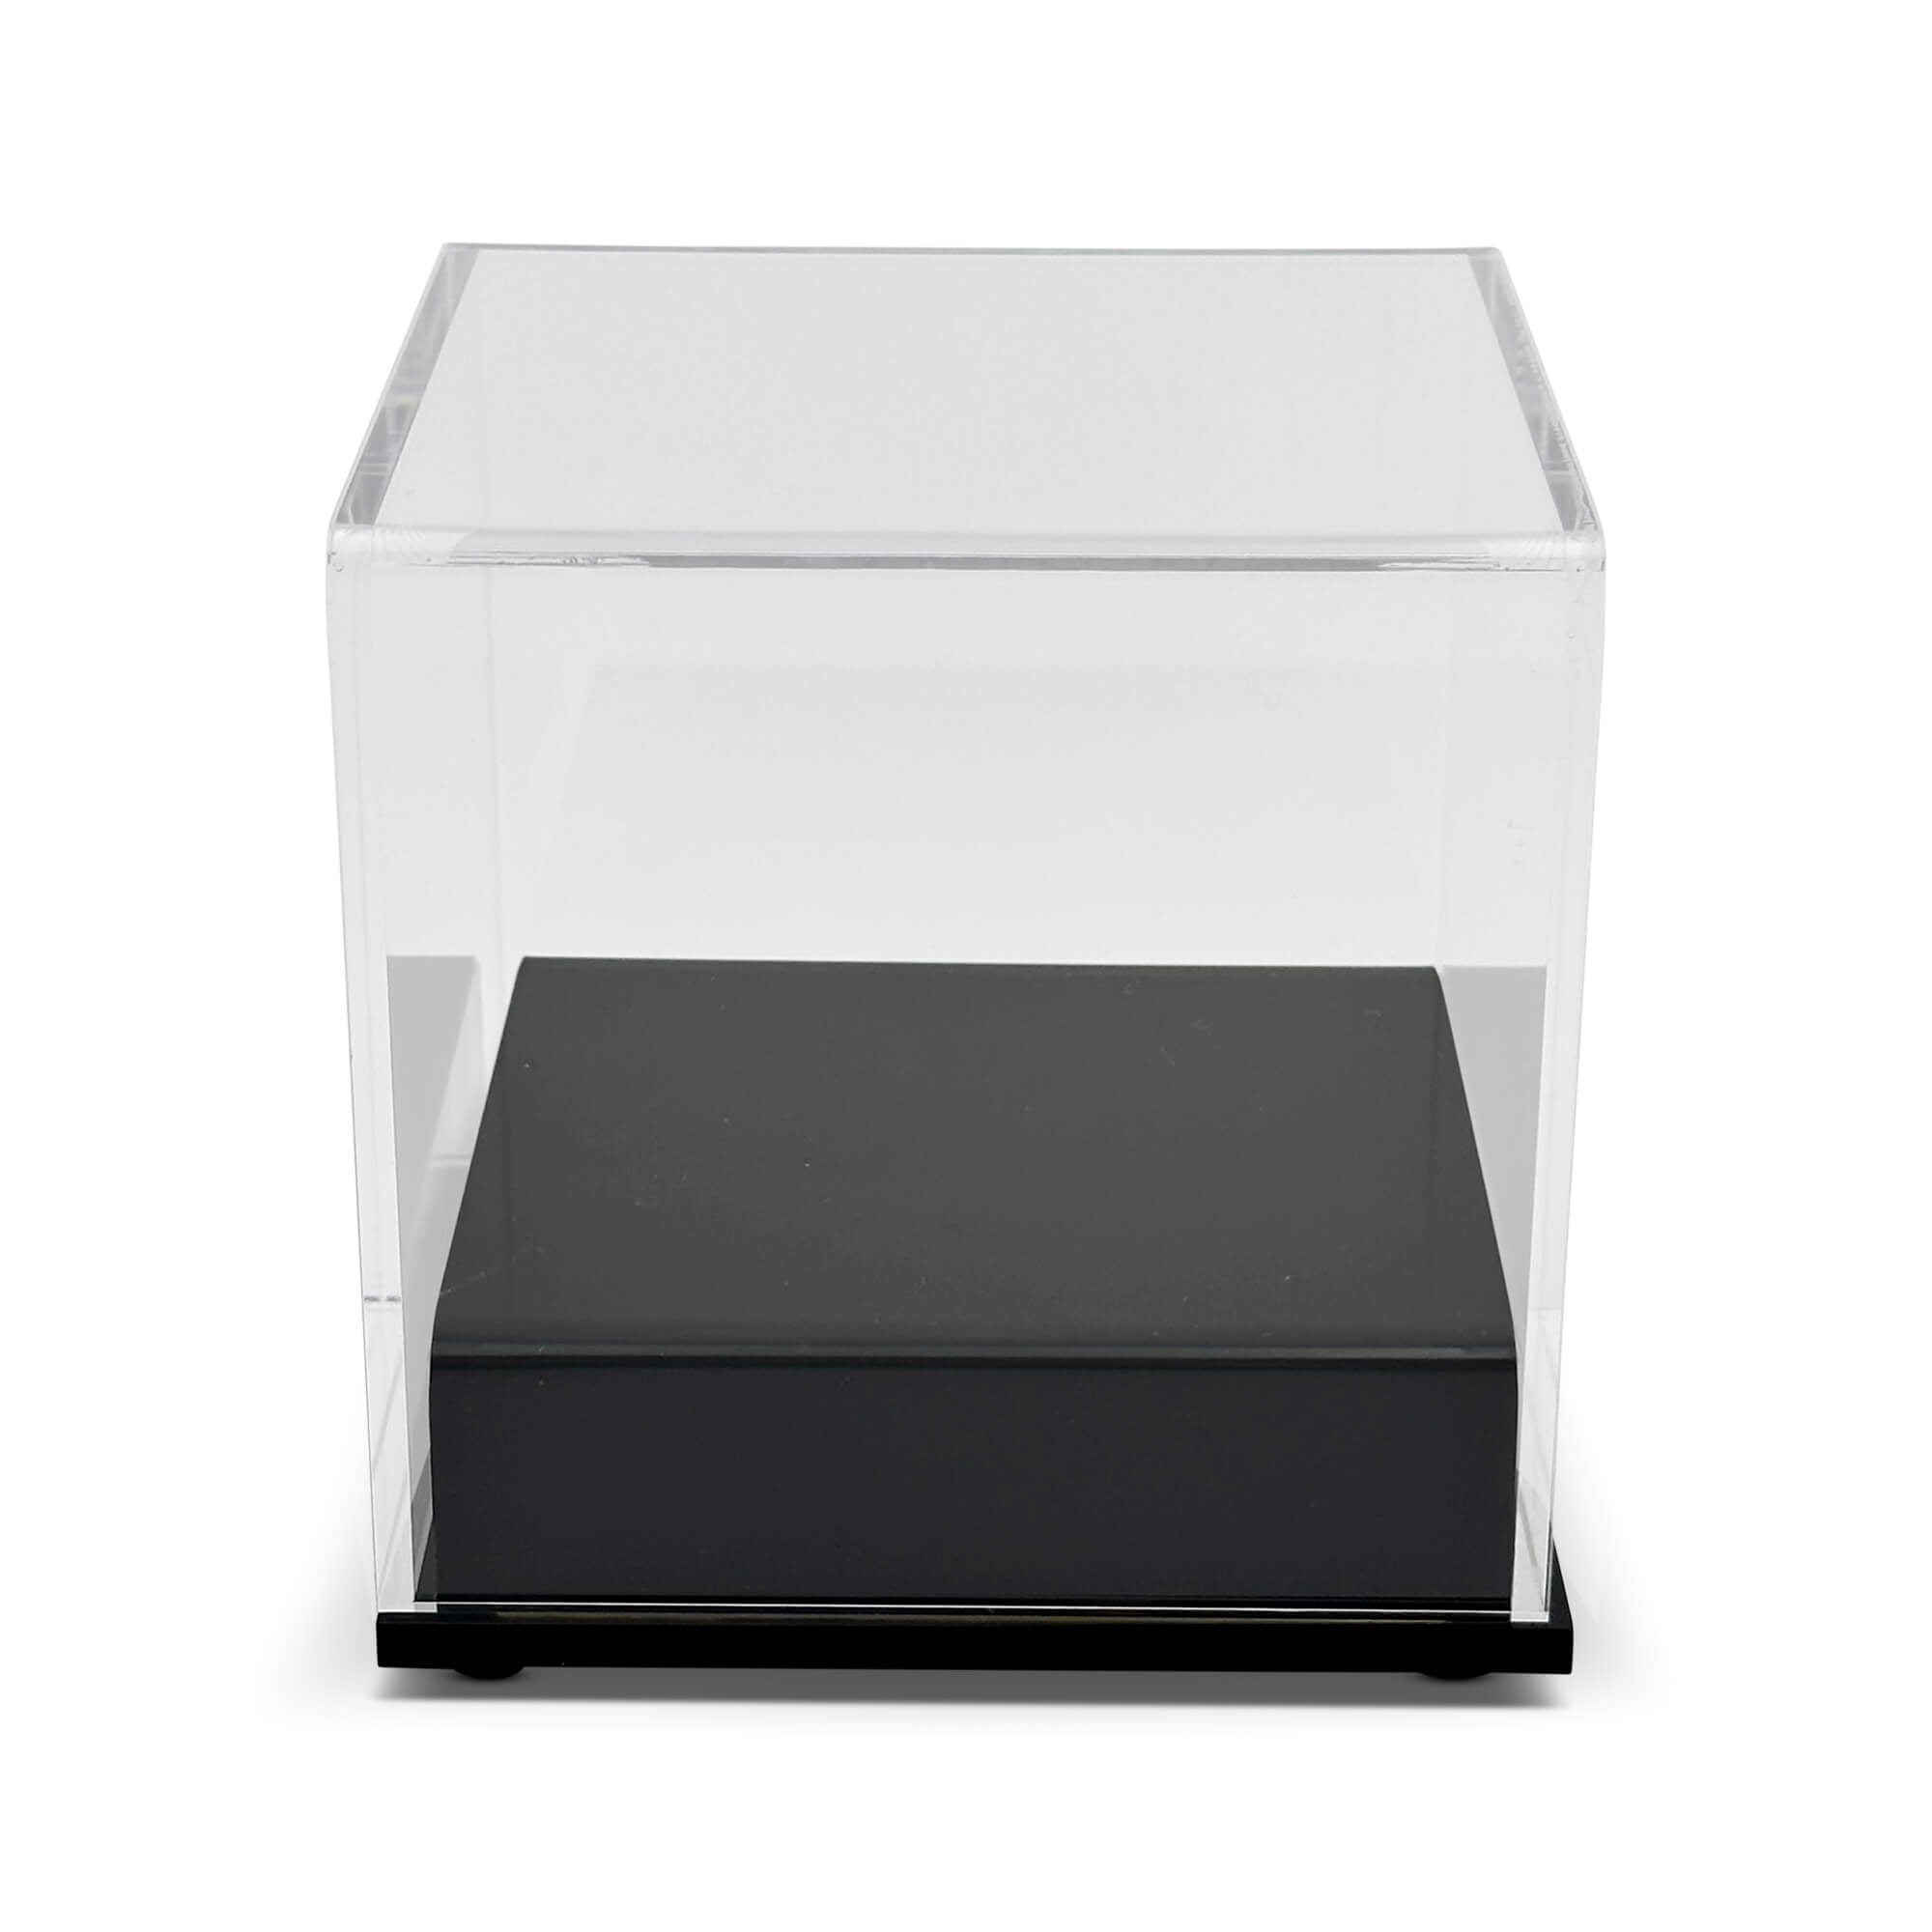 4" Clear Acrylic Display Case Box